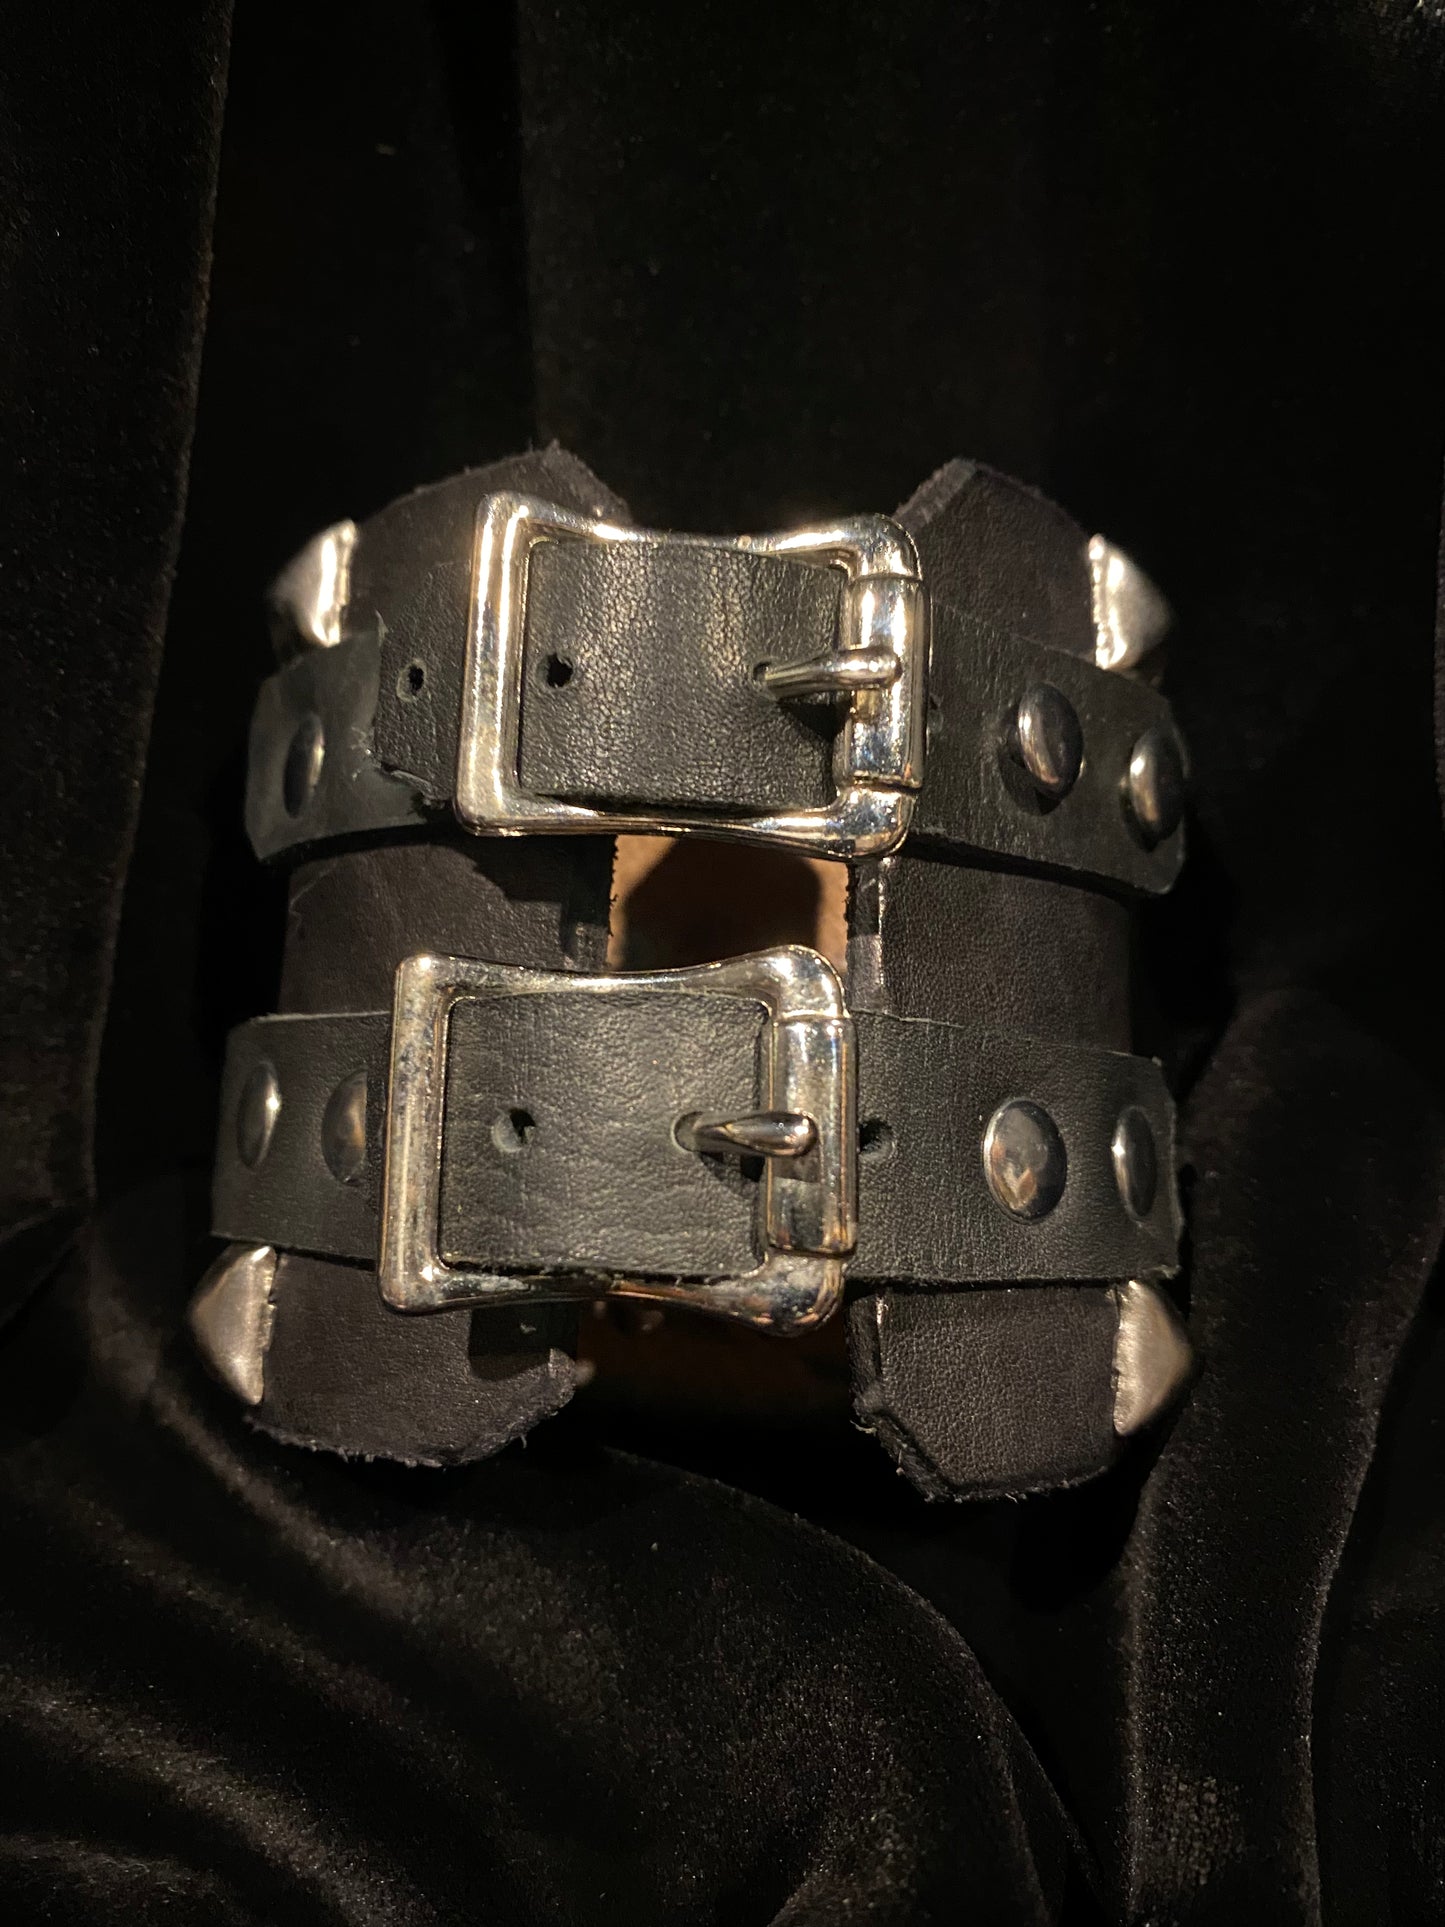 Diggers Leather Studded “Venom” Buckled Wrist Cuff